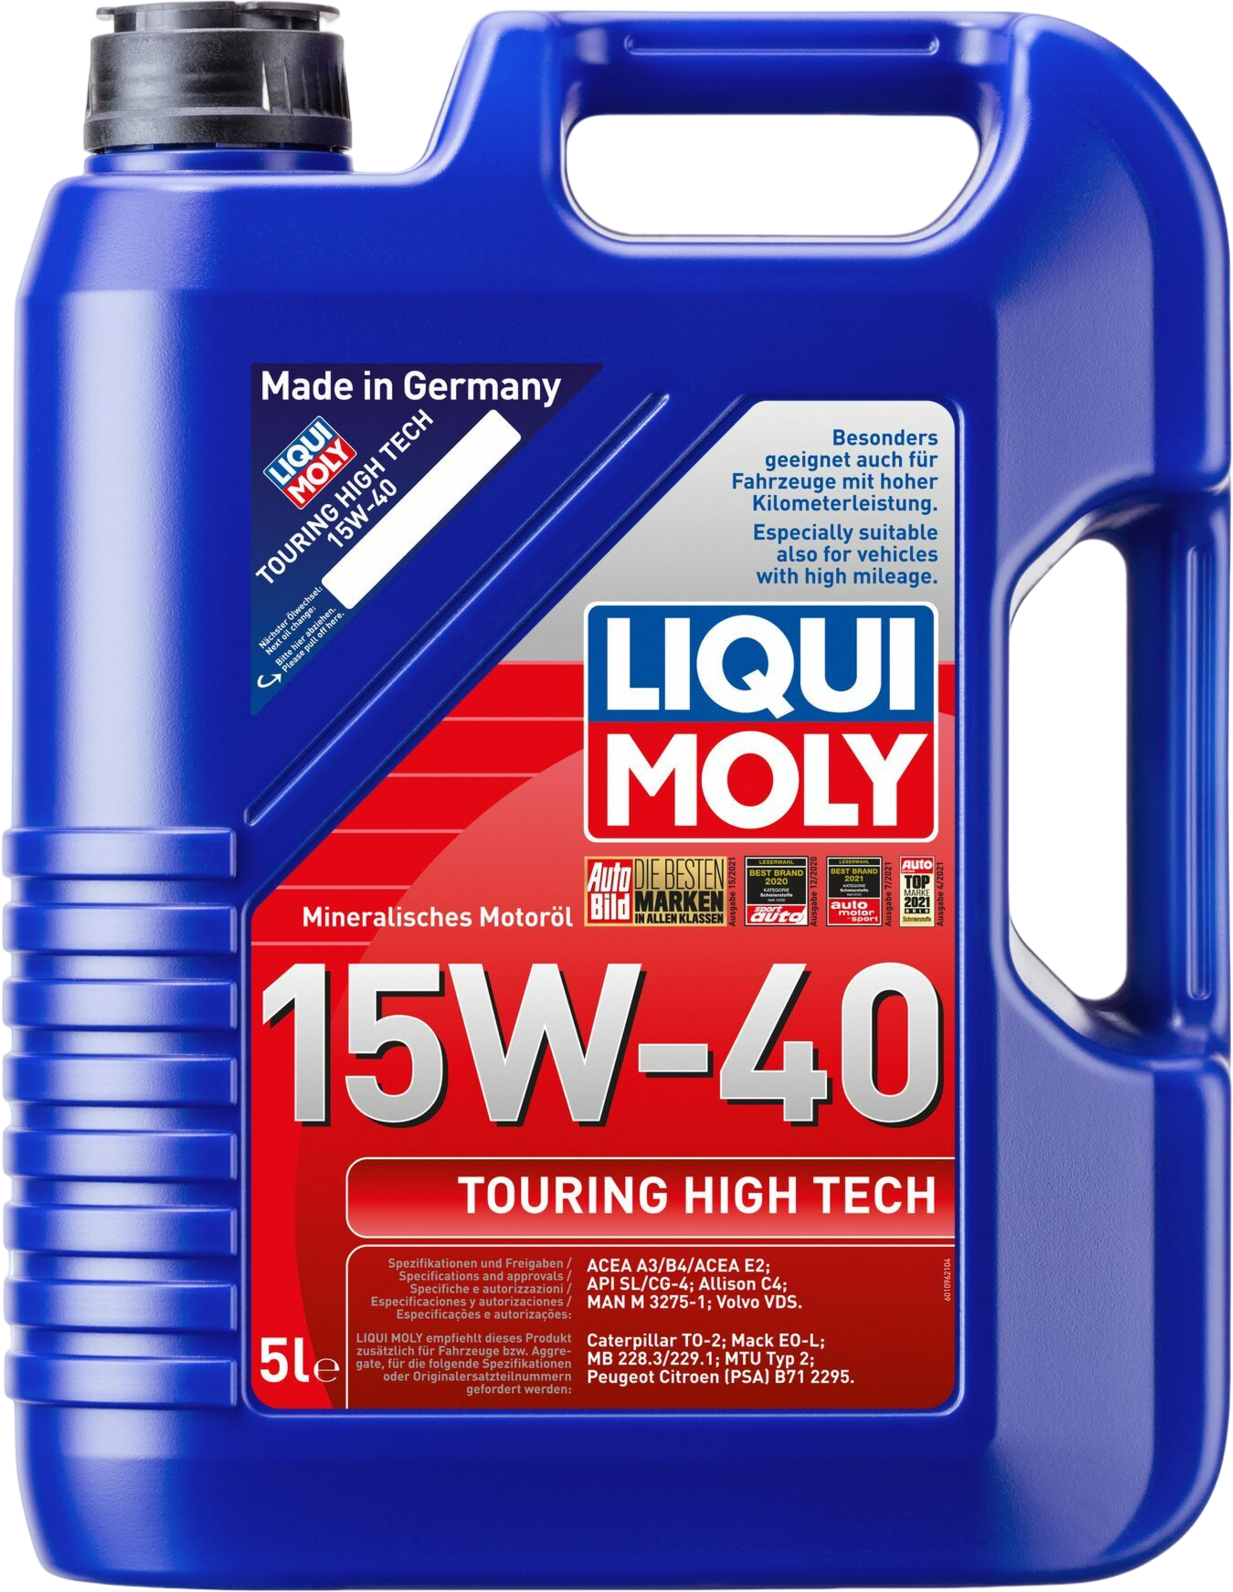 Liqui Moly Touring High Tech 15W-40, 5 lt